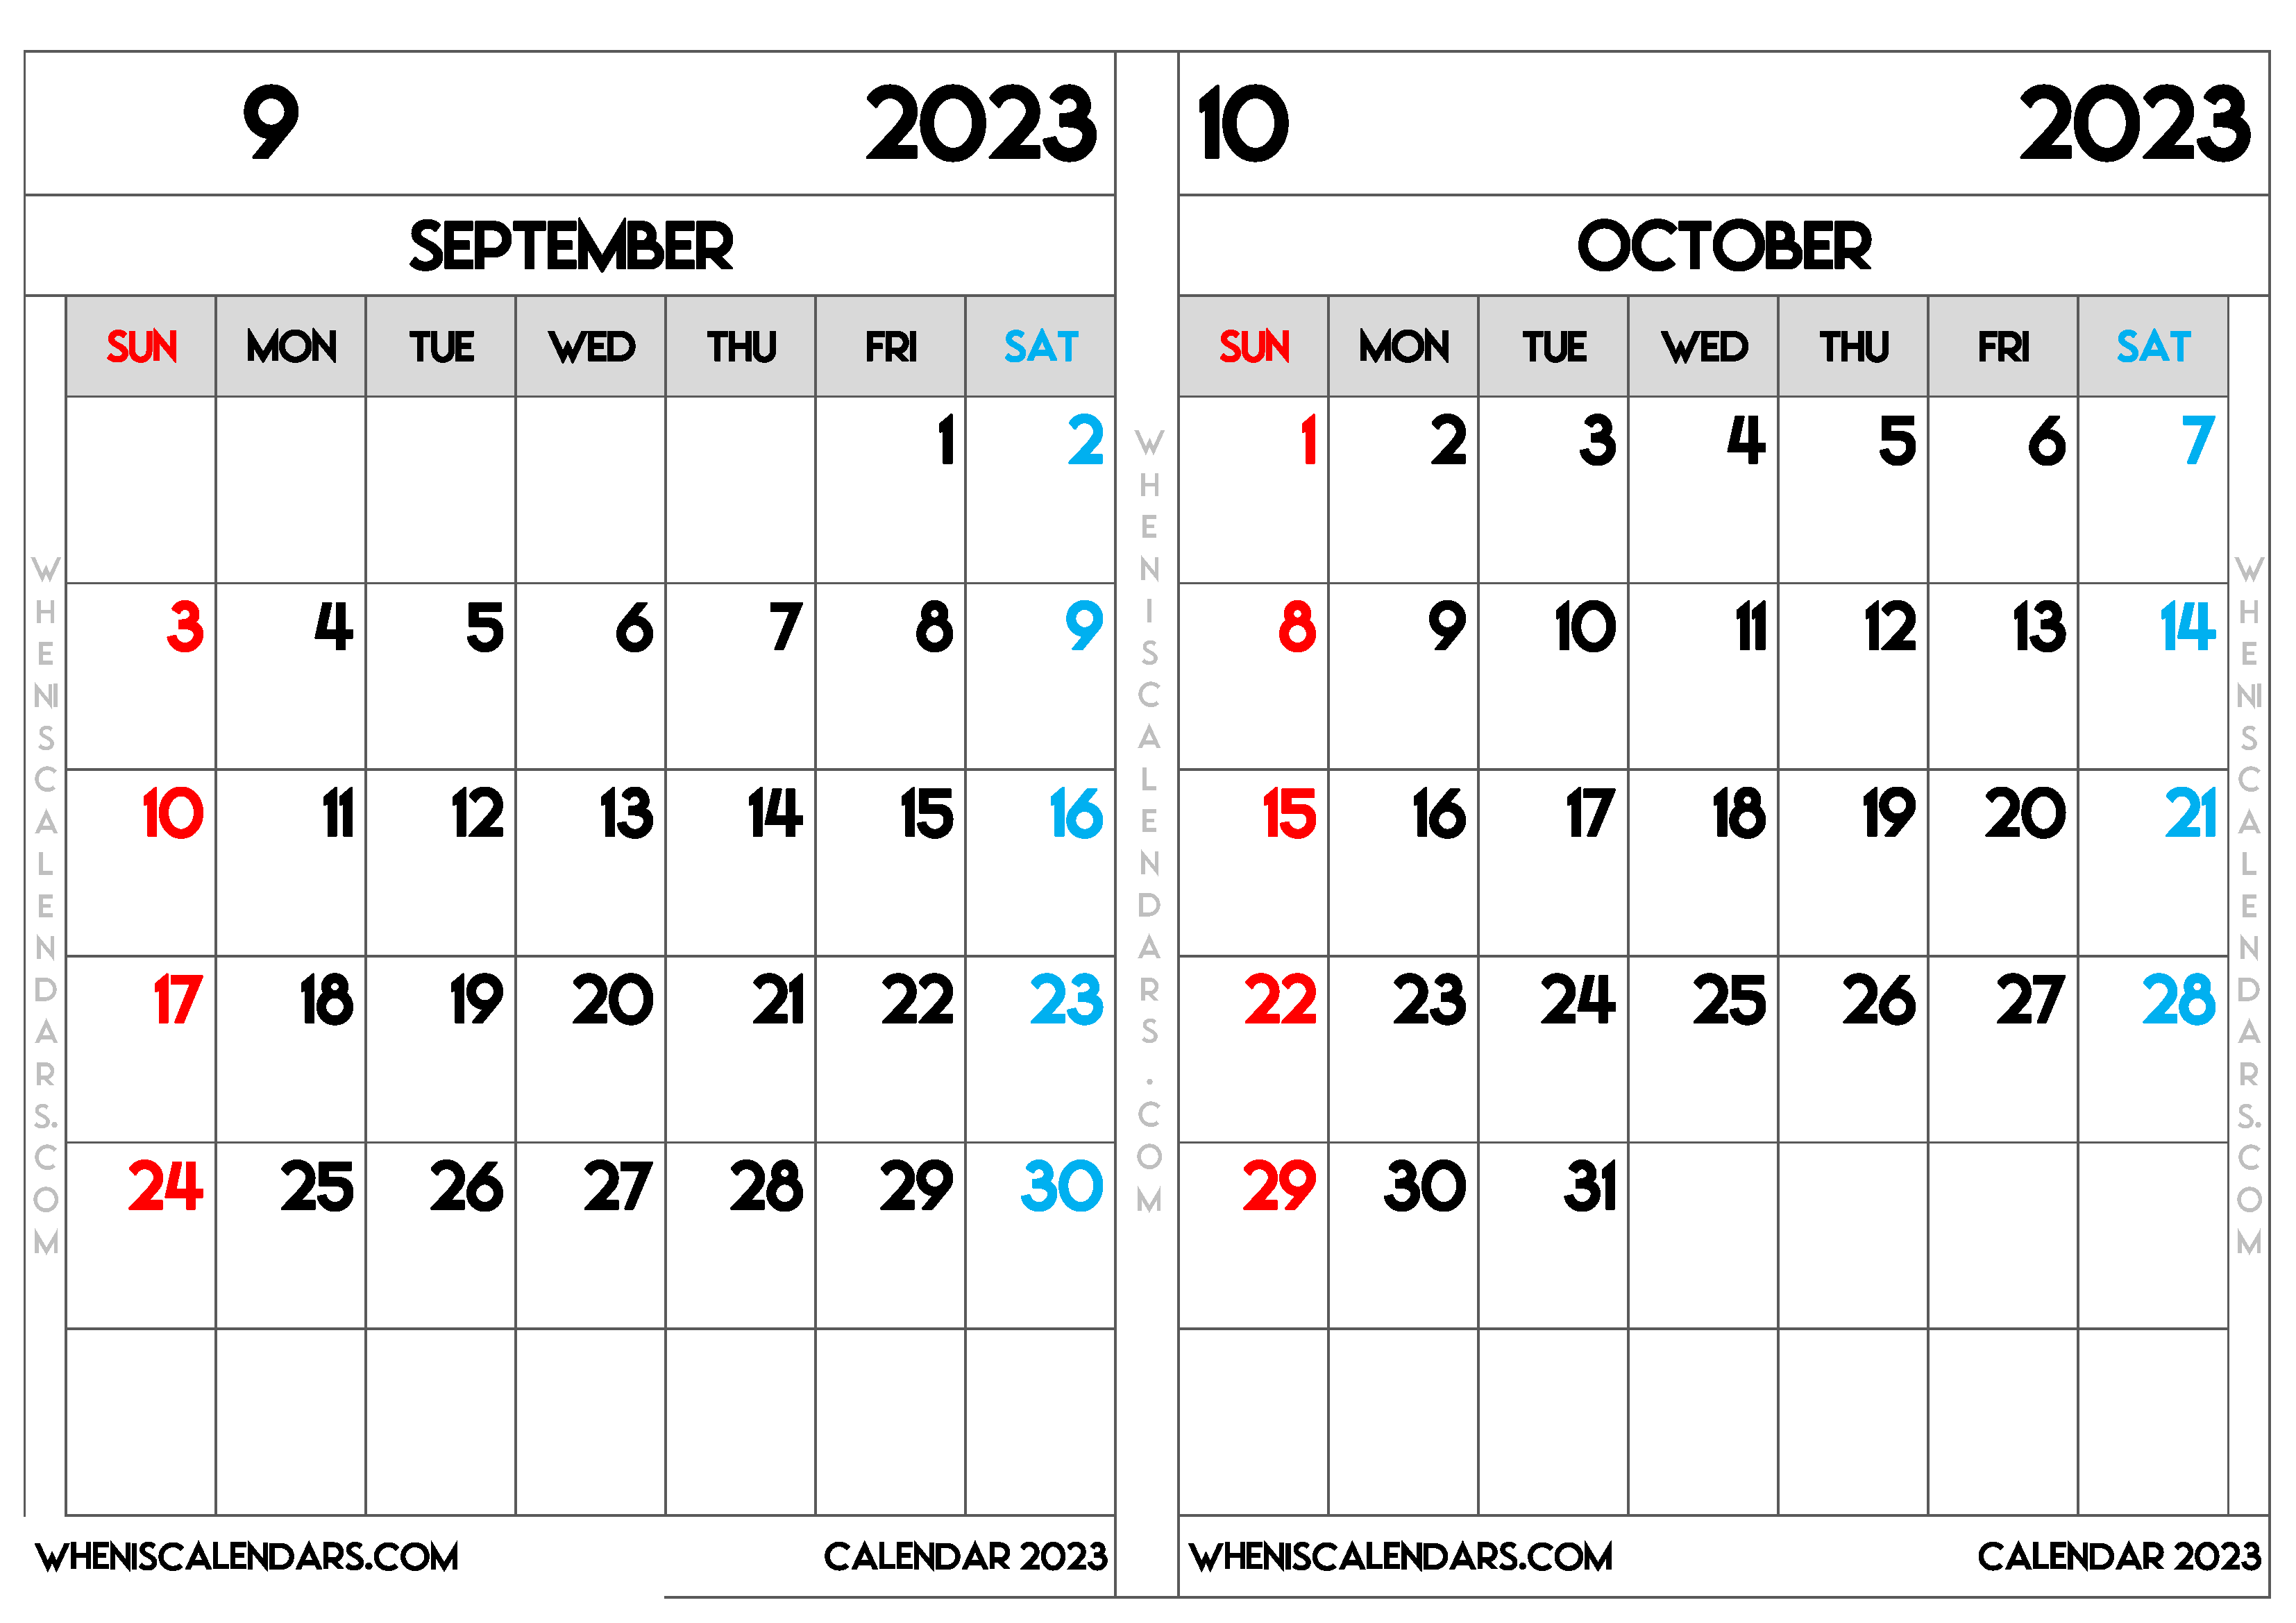 september-2024-calendar-free-printable-calendar